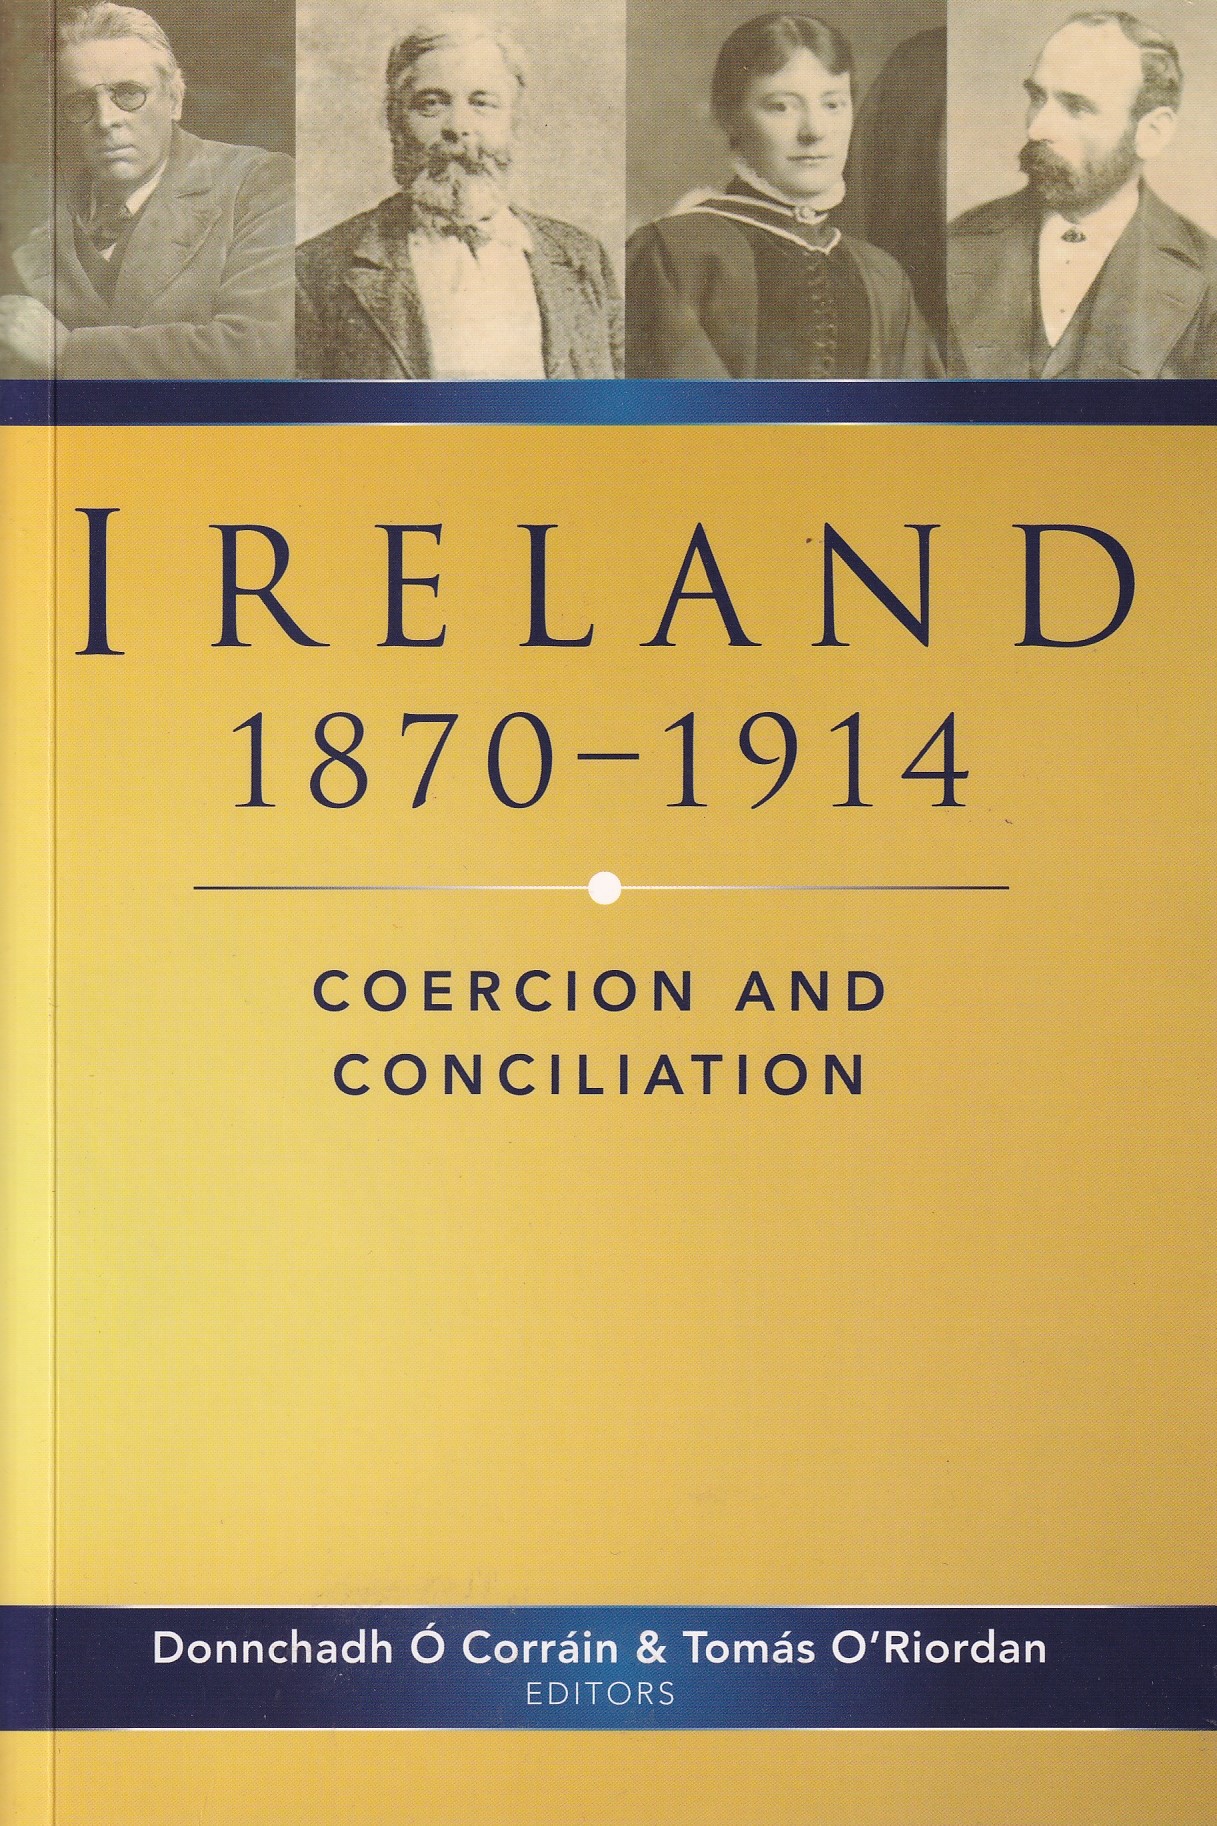 Ireland, 1870-1914: Coercion and Conciliation by Donnchadh Ó Corráin & Thomás O'Riordan